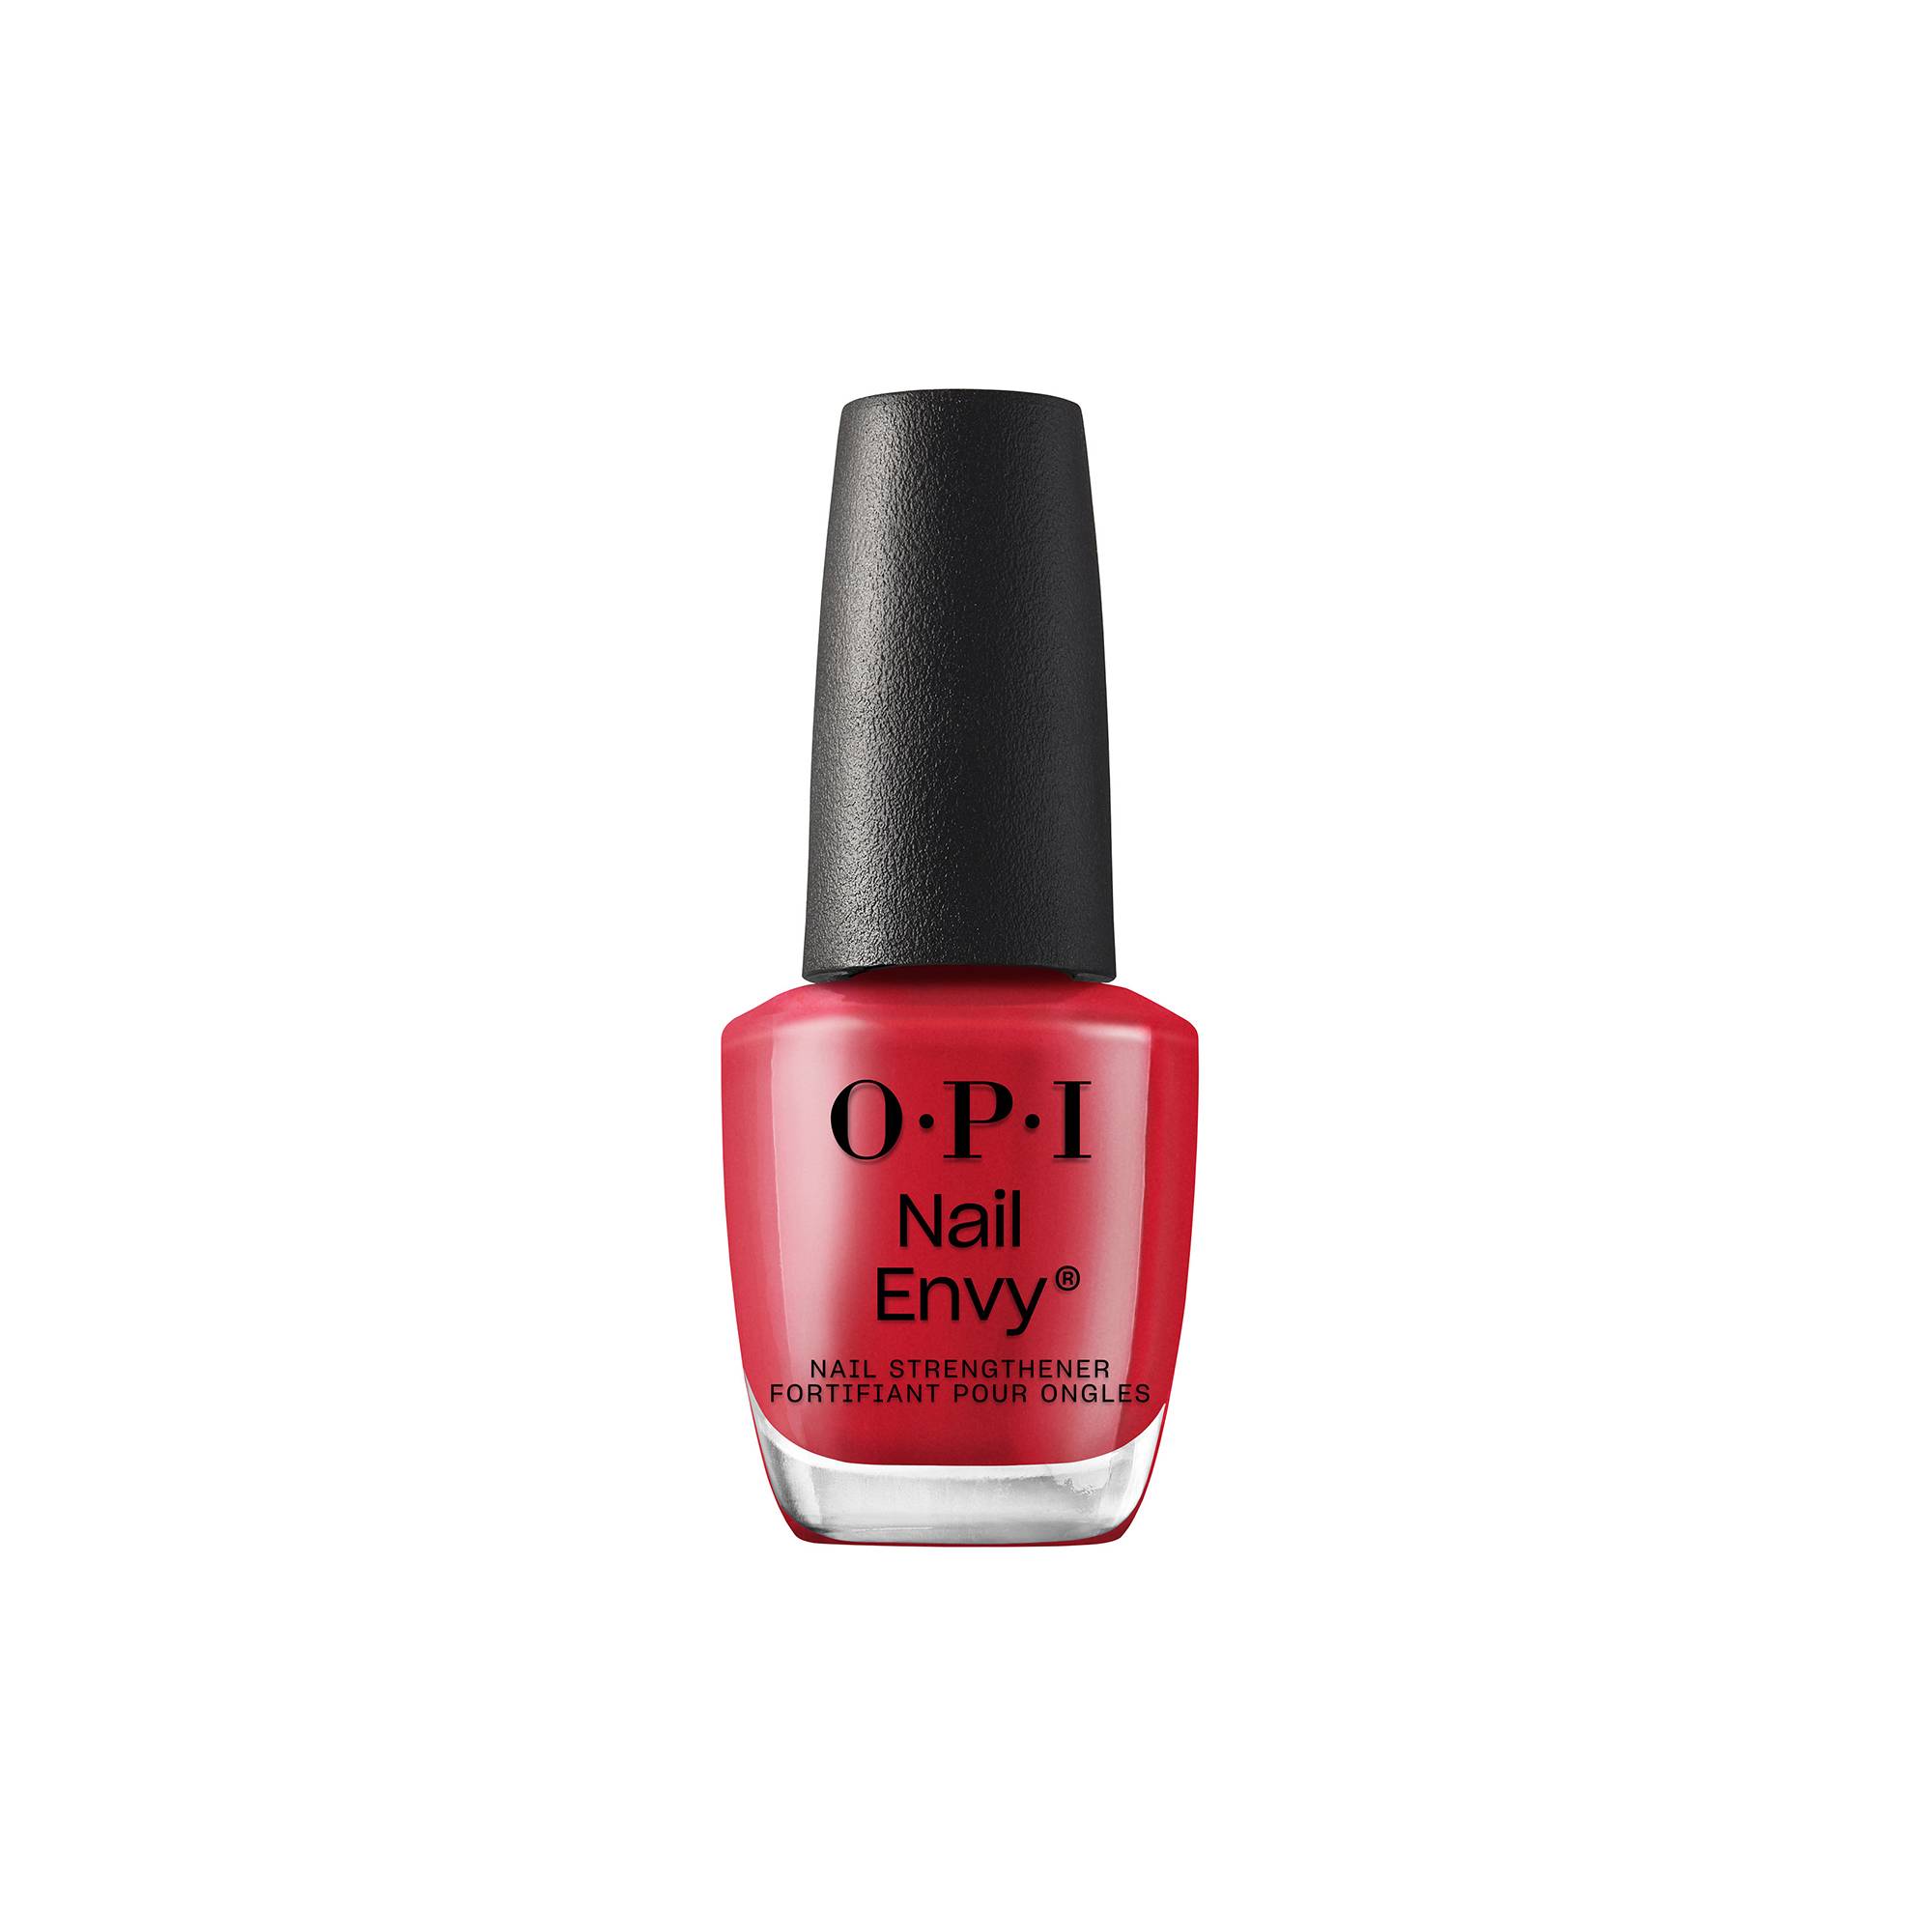 Fortifiant pour ongles Nail Envy Big Apple Red™ de la marque OPI Contenance 15ml - 1